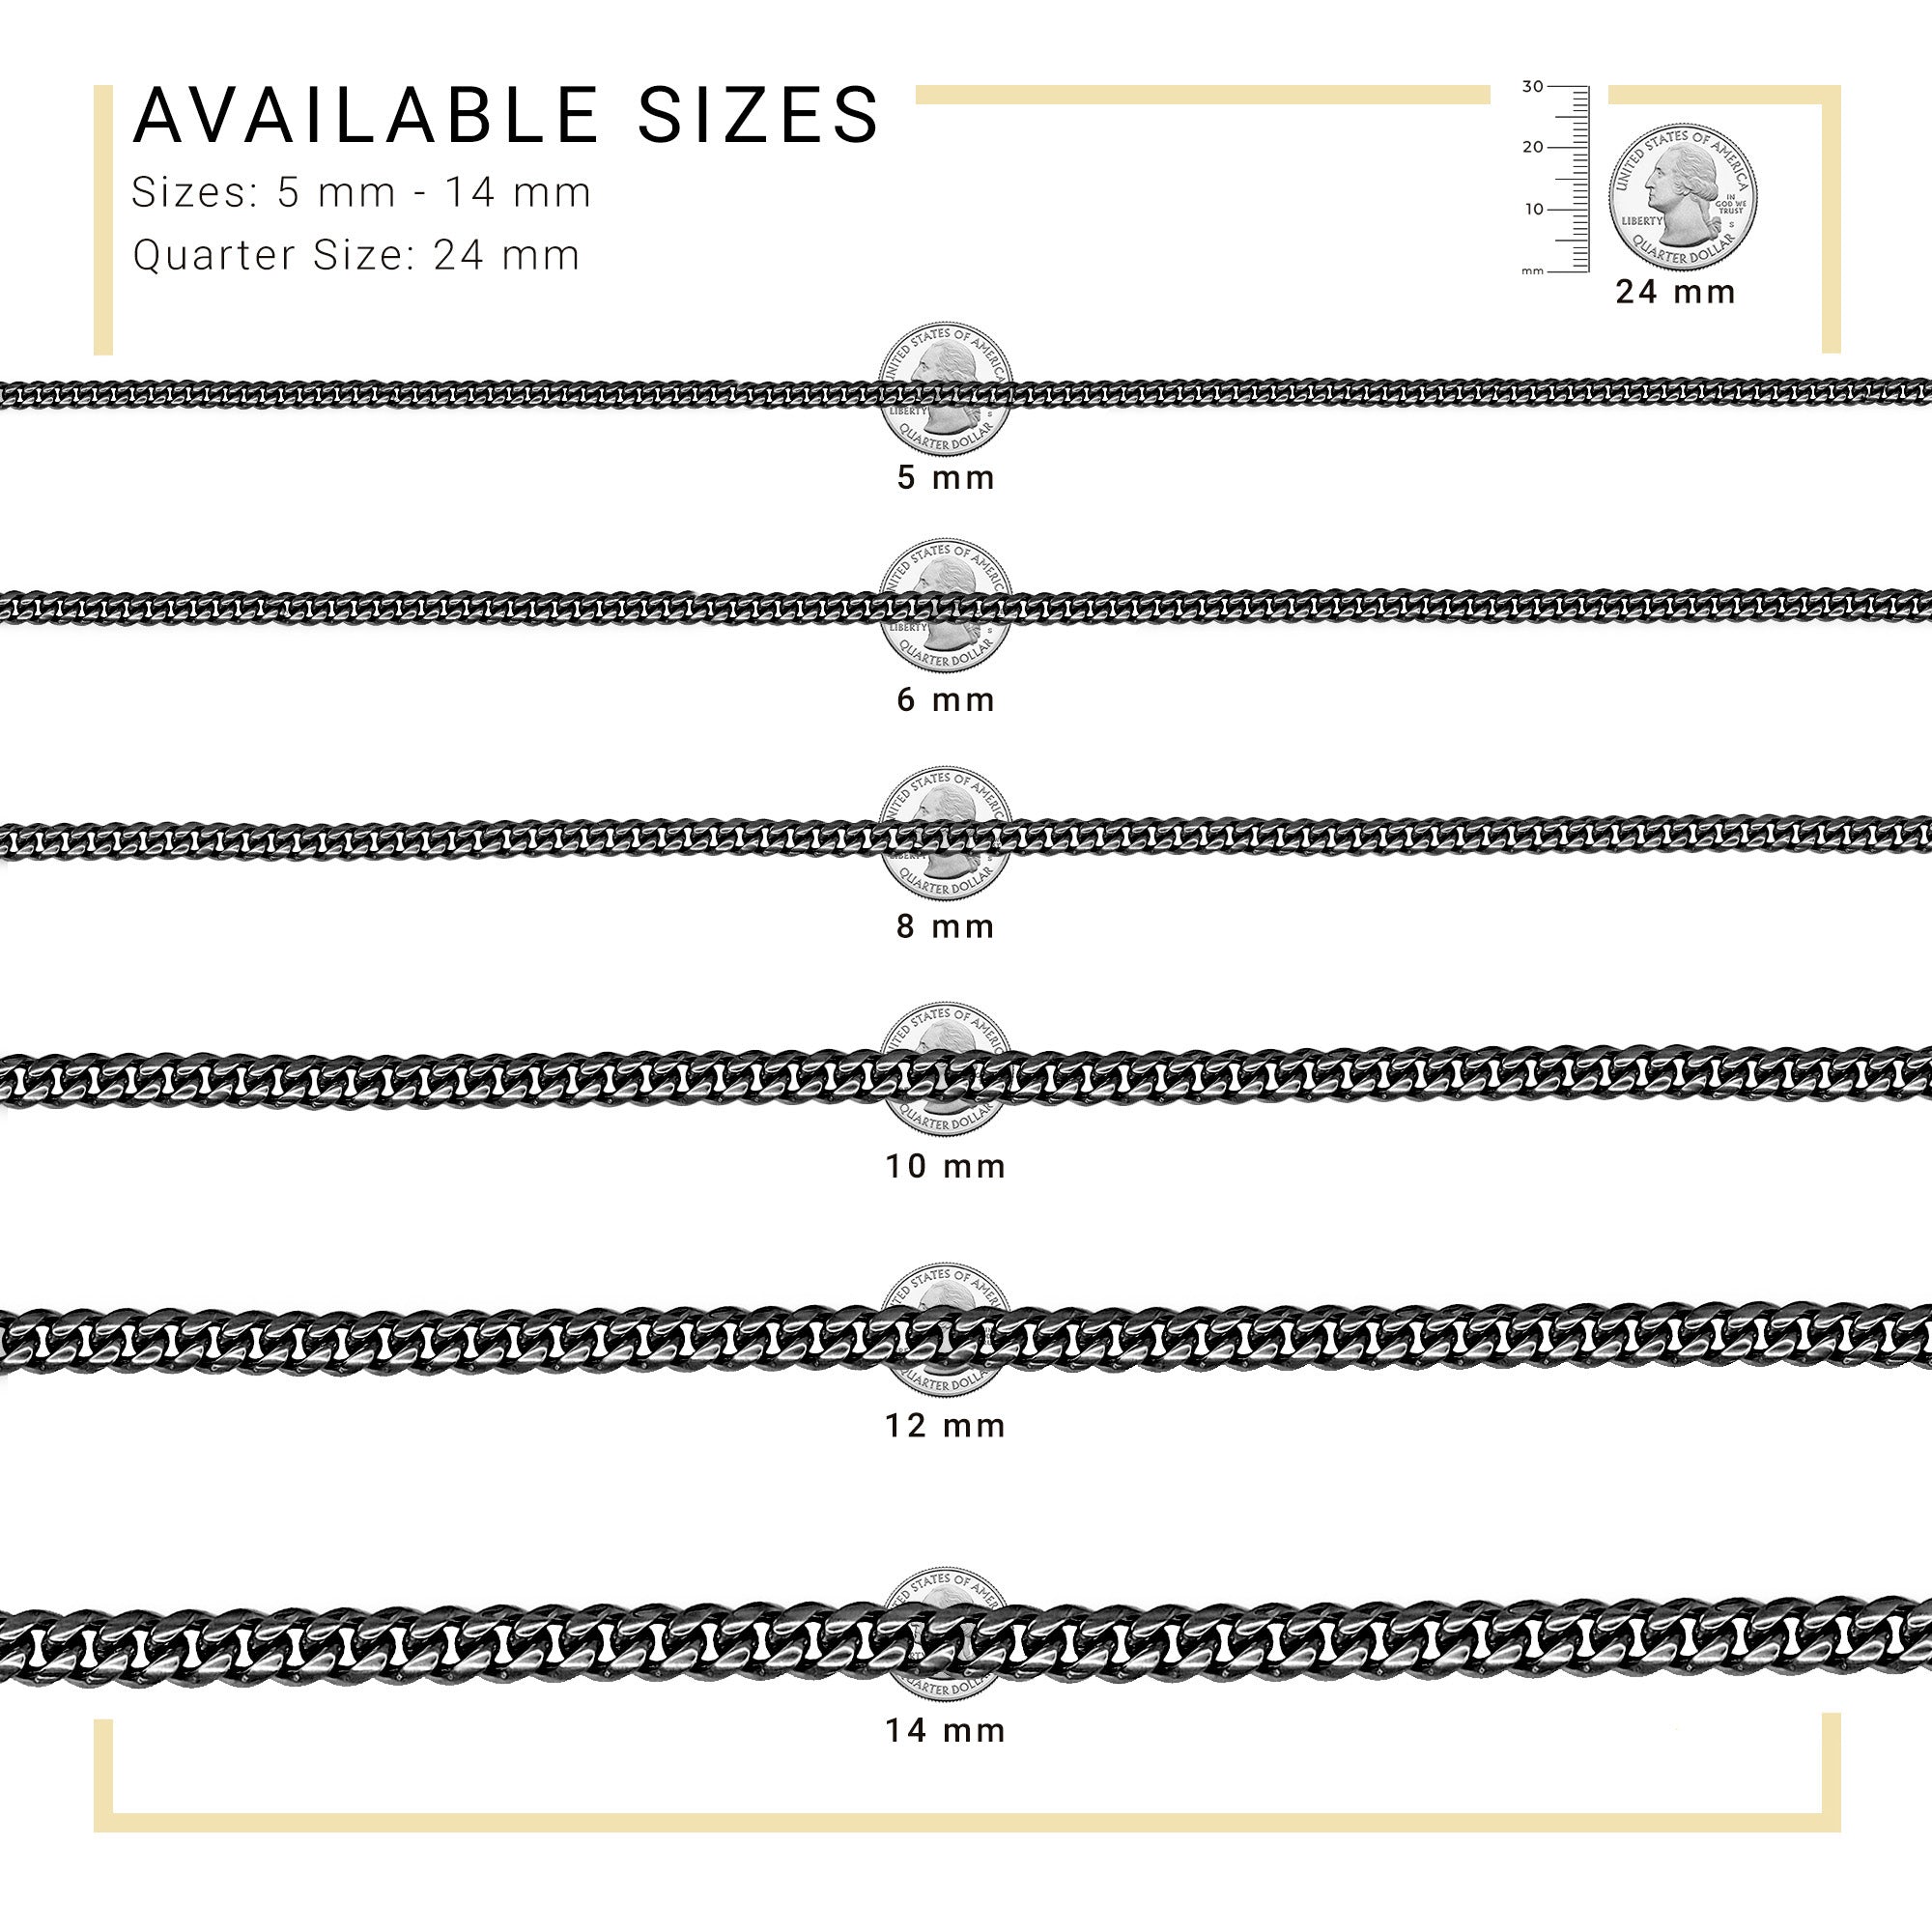 Black Cuban Link Chain Necklace 30" Bracelet 8.5" Stainless Steel Set For Men